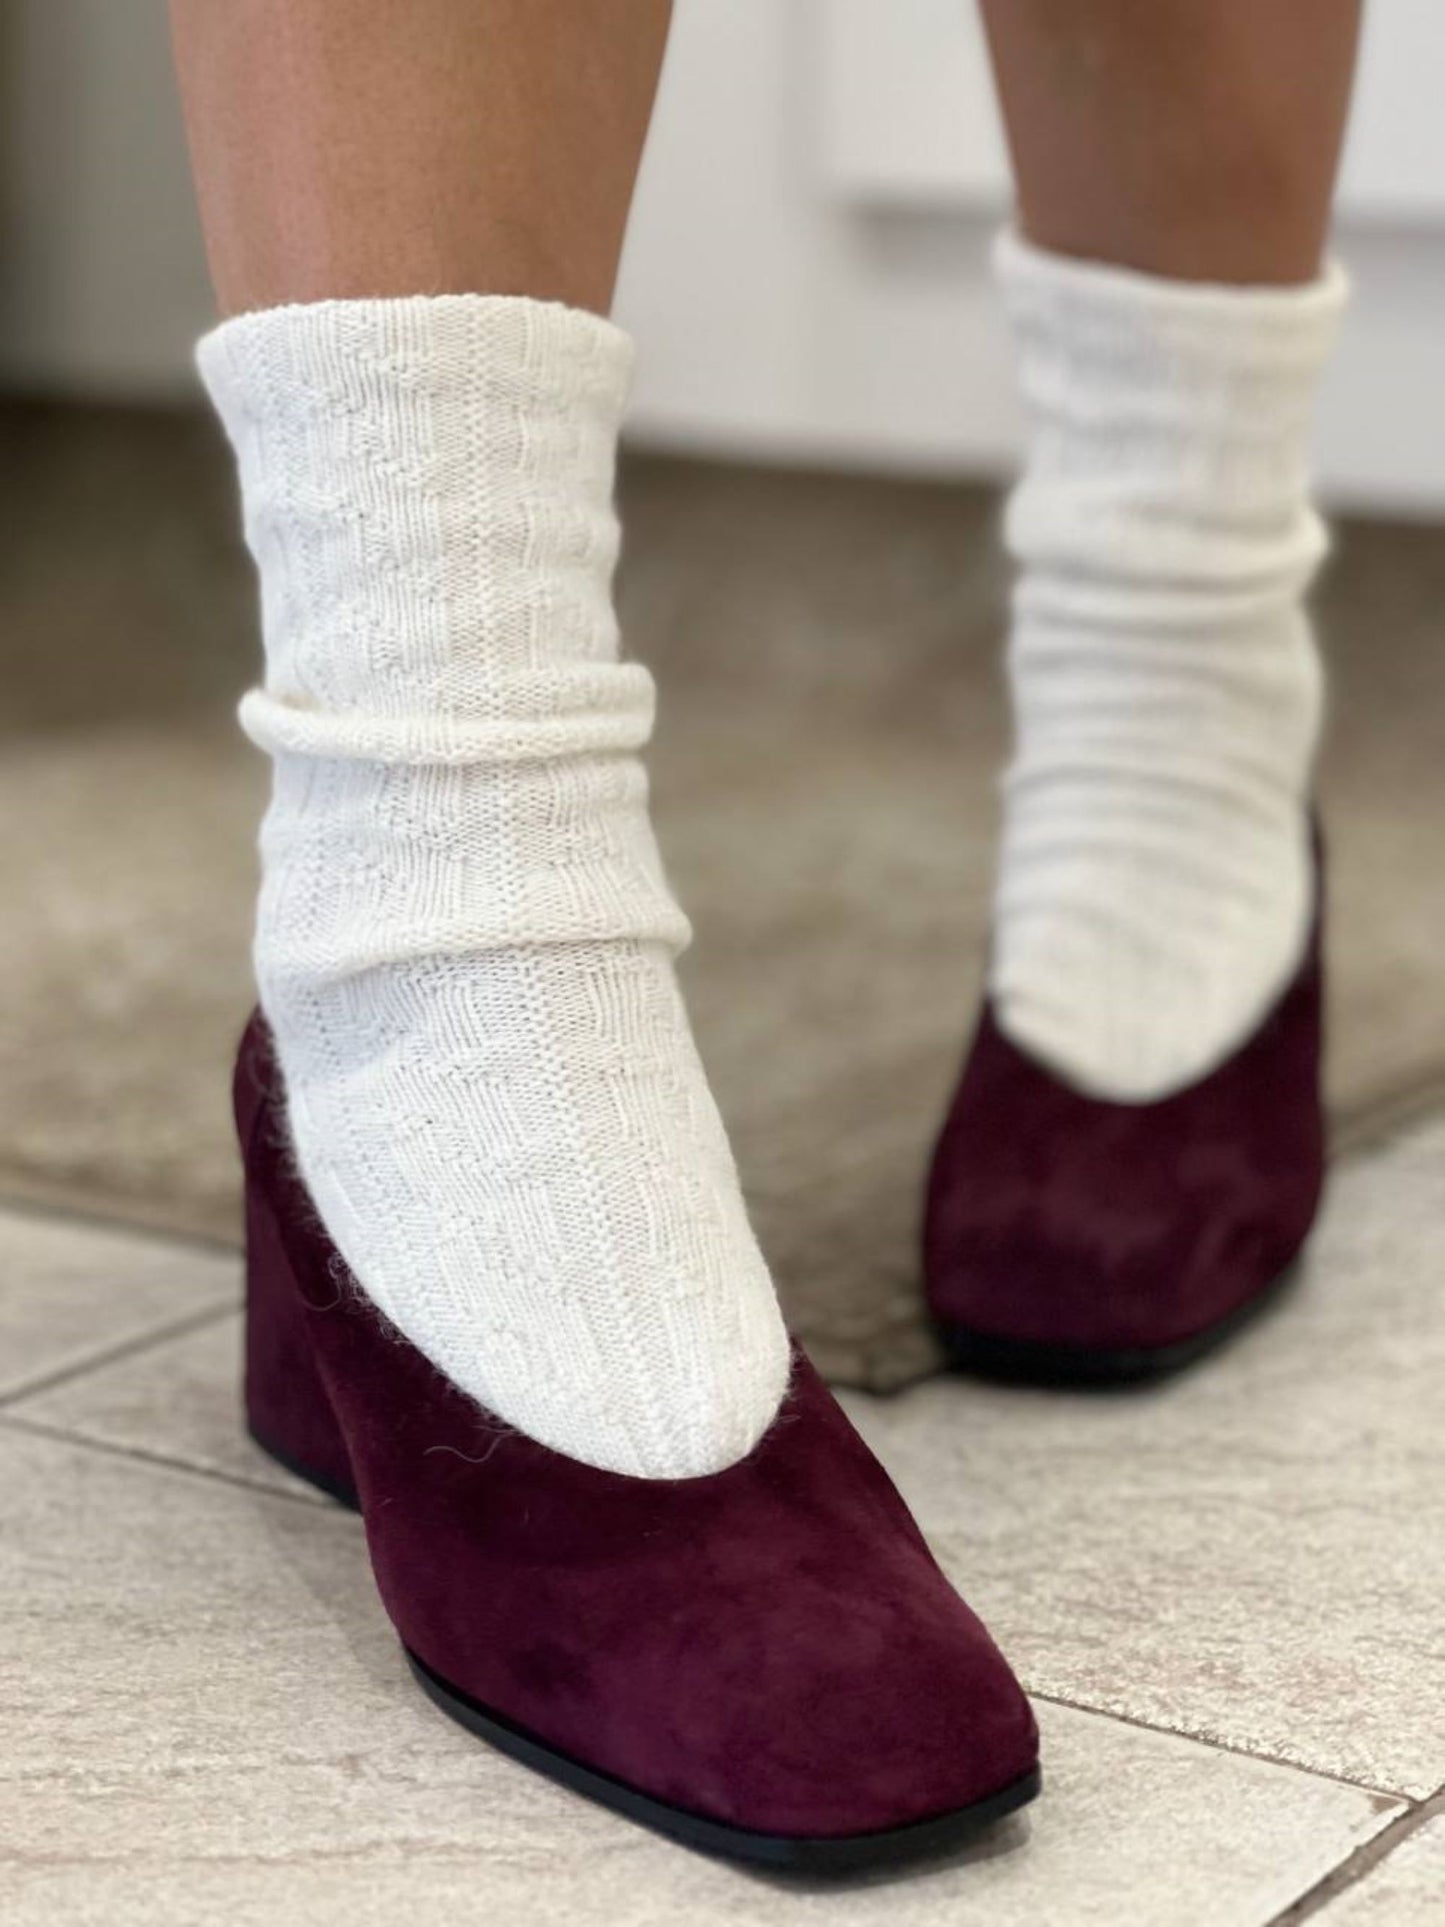 Angora socks in white